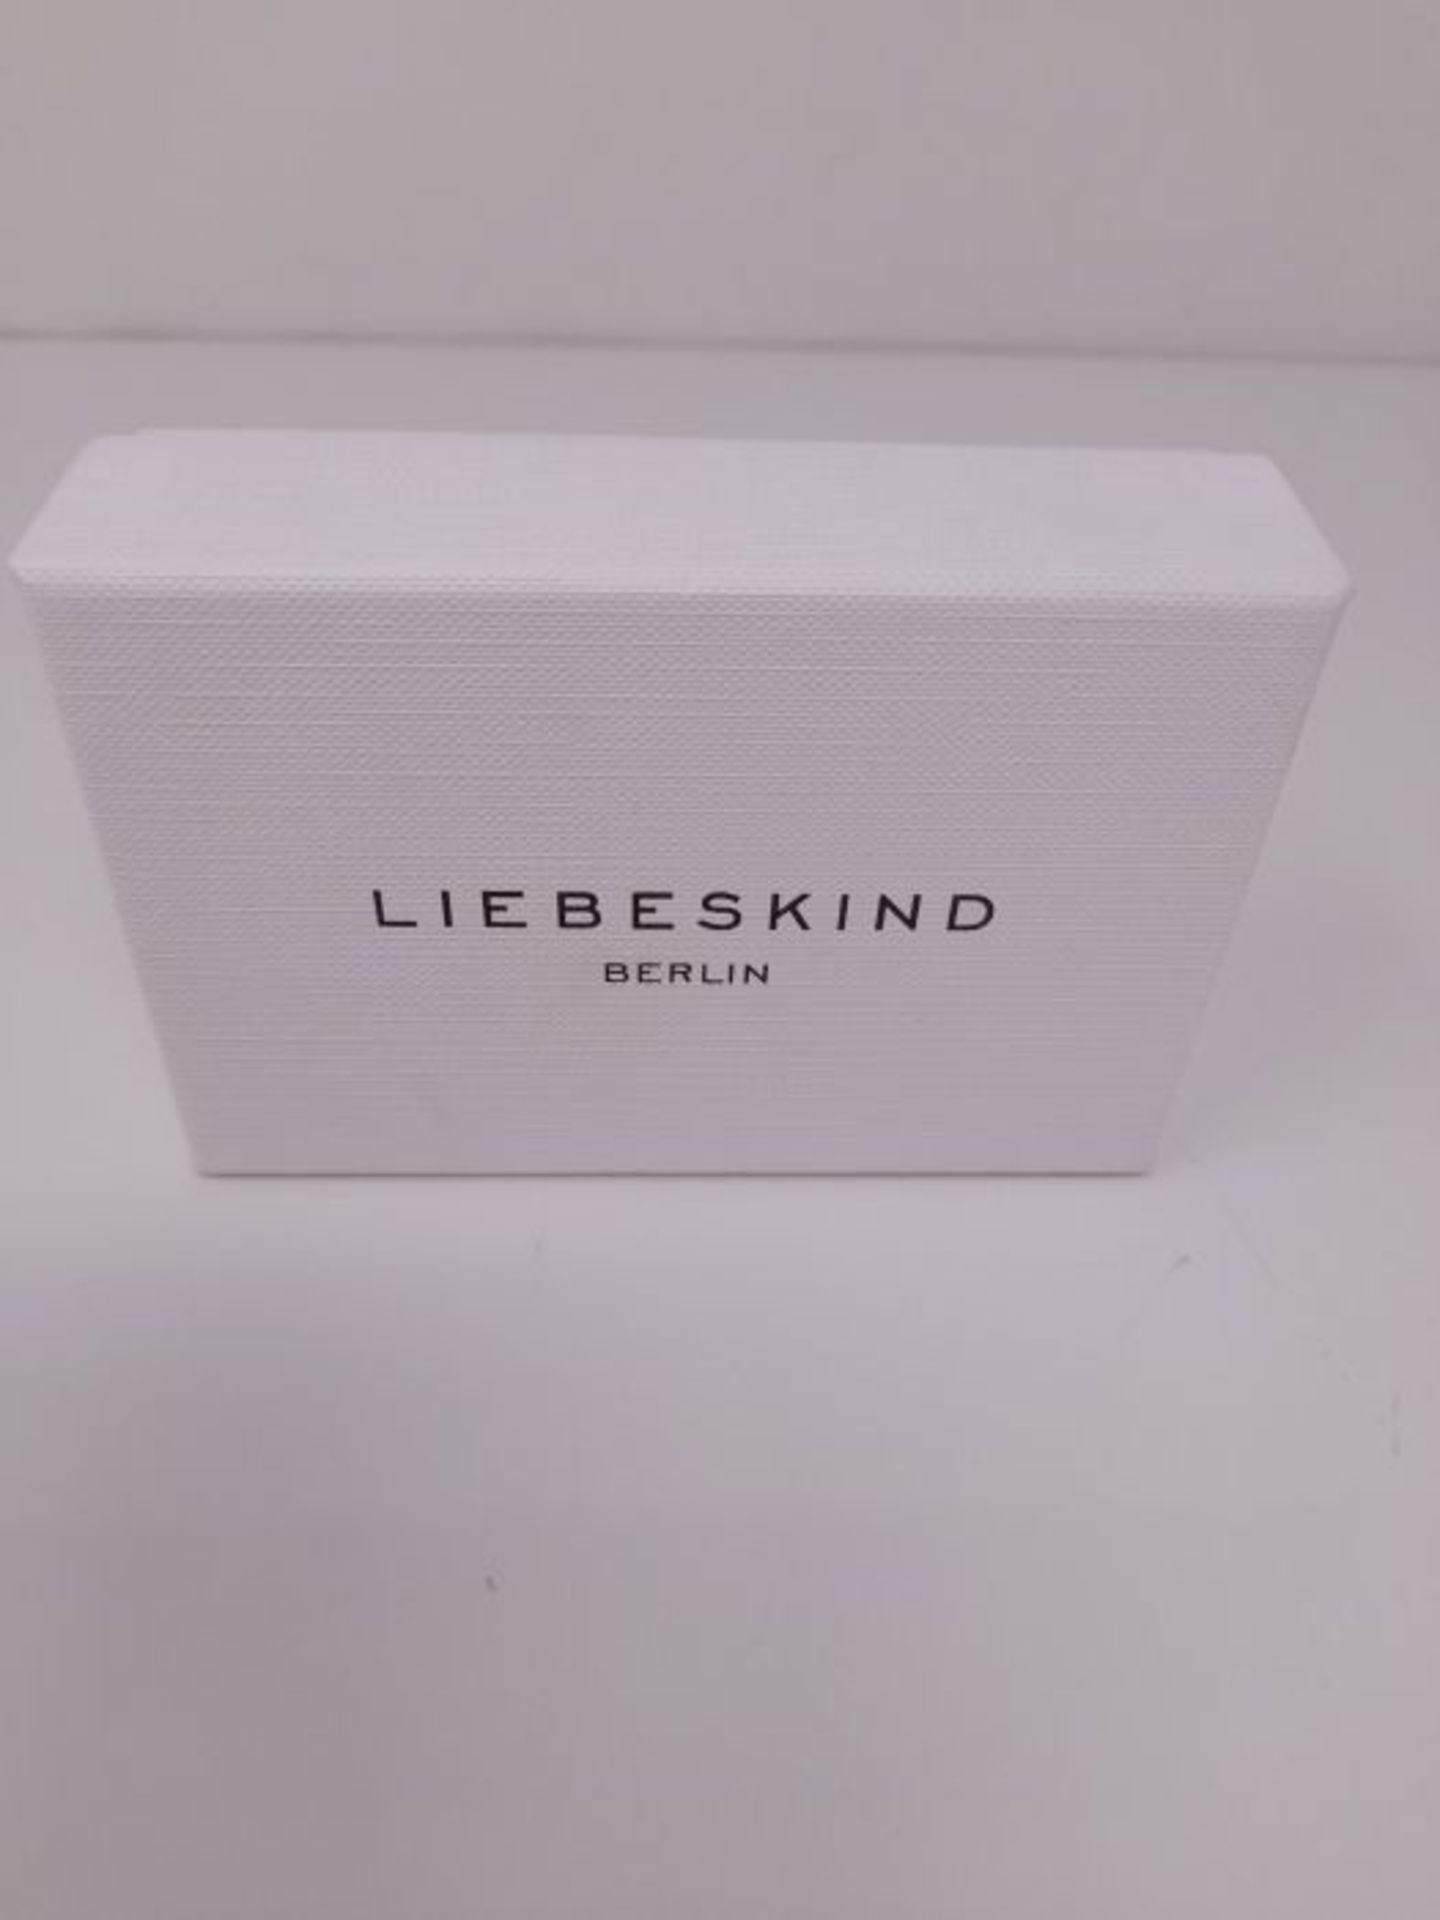 [CRACKED] LIEBESKIND BERLIN Beads 6mm mit Logotag in Edelstahl